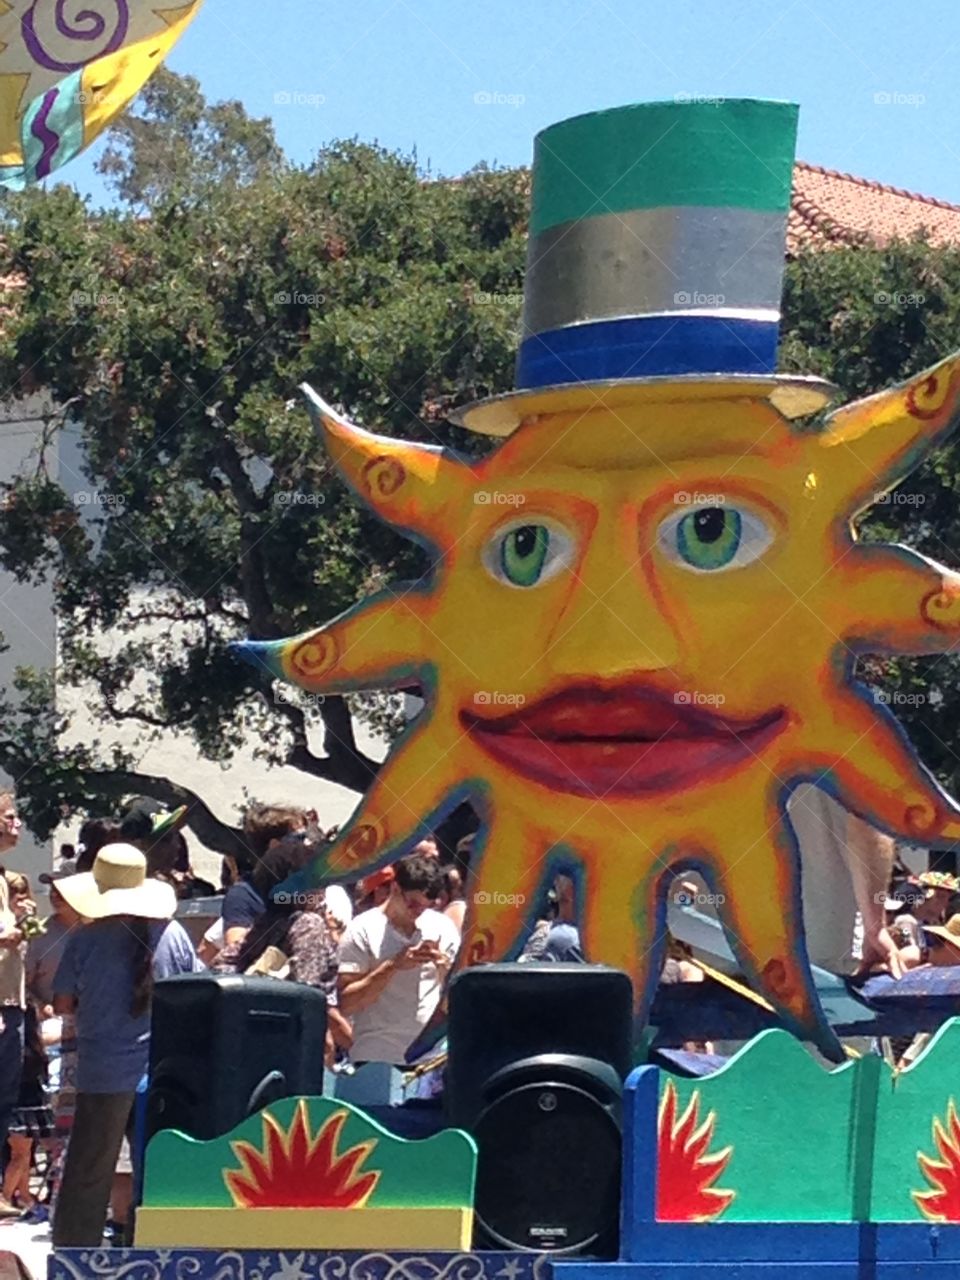 Solstice Sun . Sun from summer solstice parade, Santa Barbara CA June 2015

